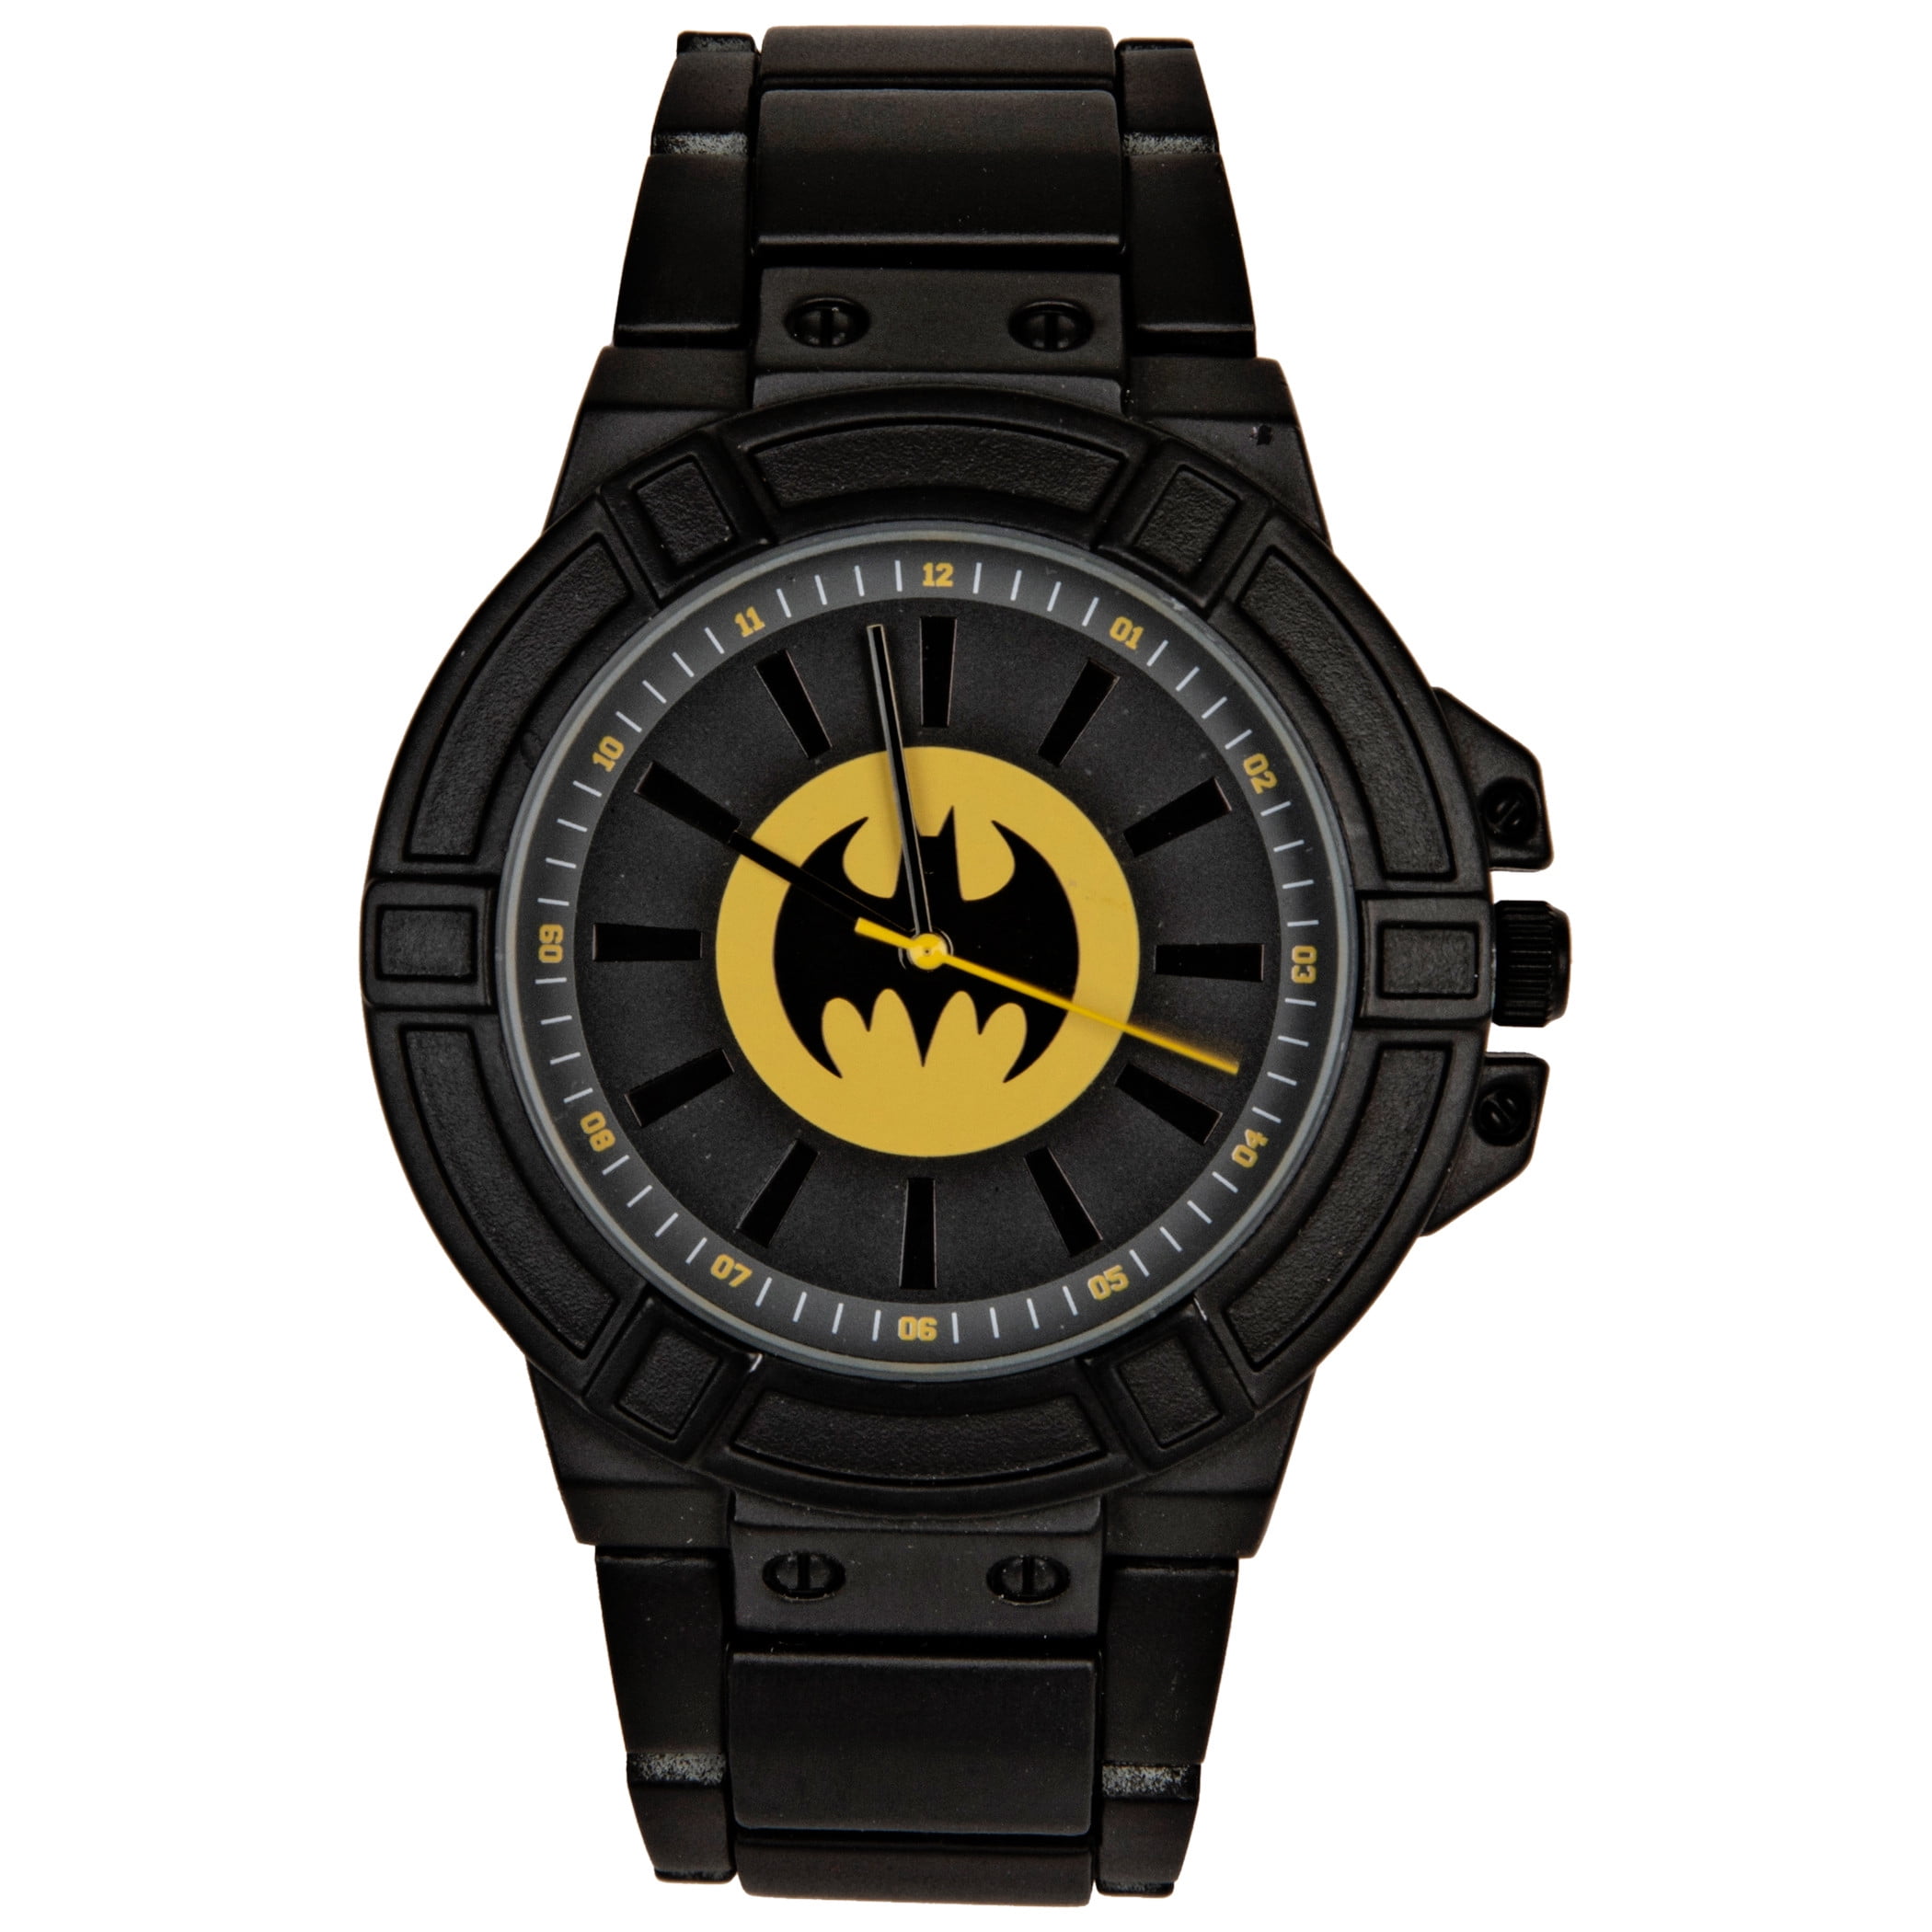 DC Comics Batman Classic Symbol Watch Face with Black Metal Band -  